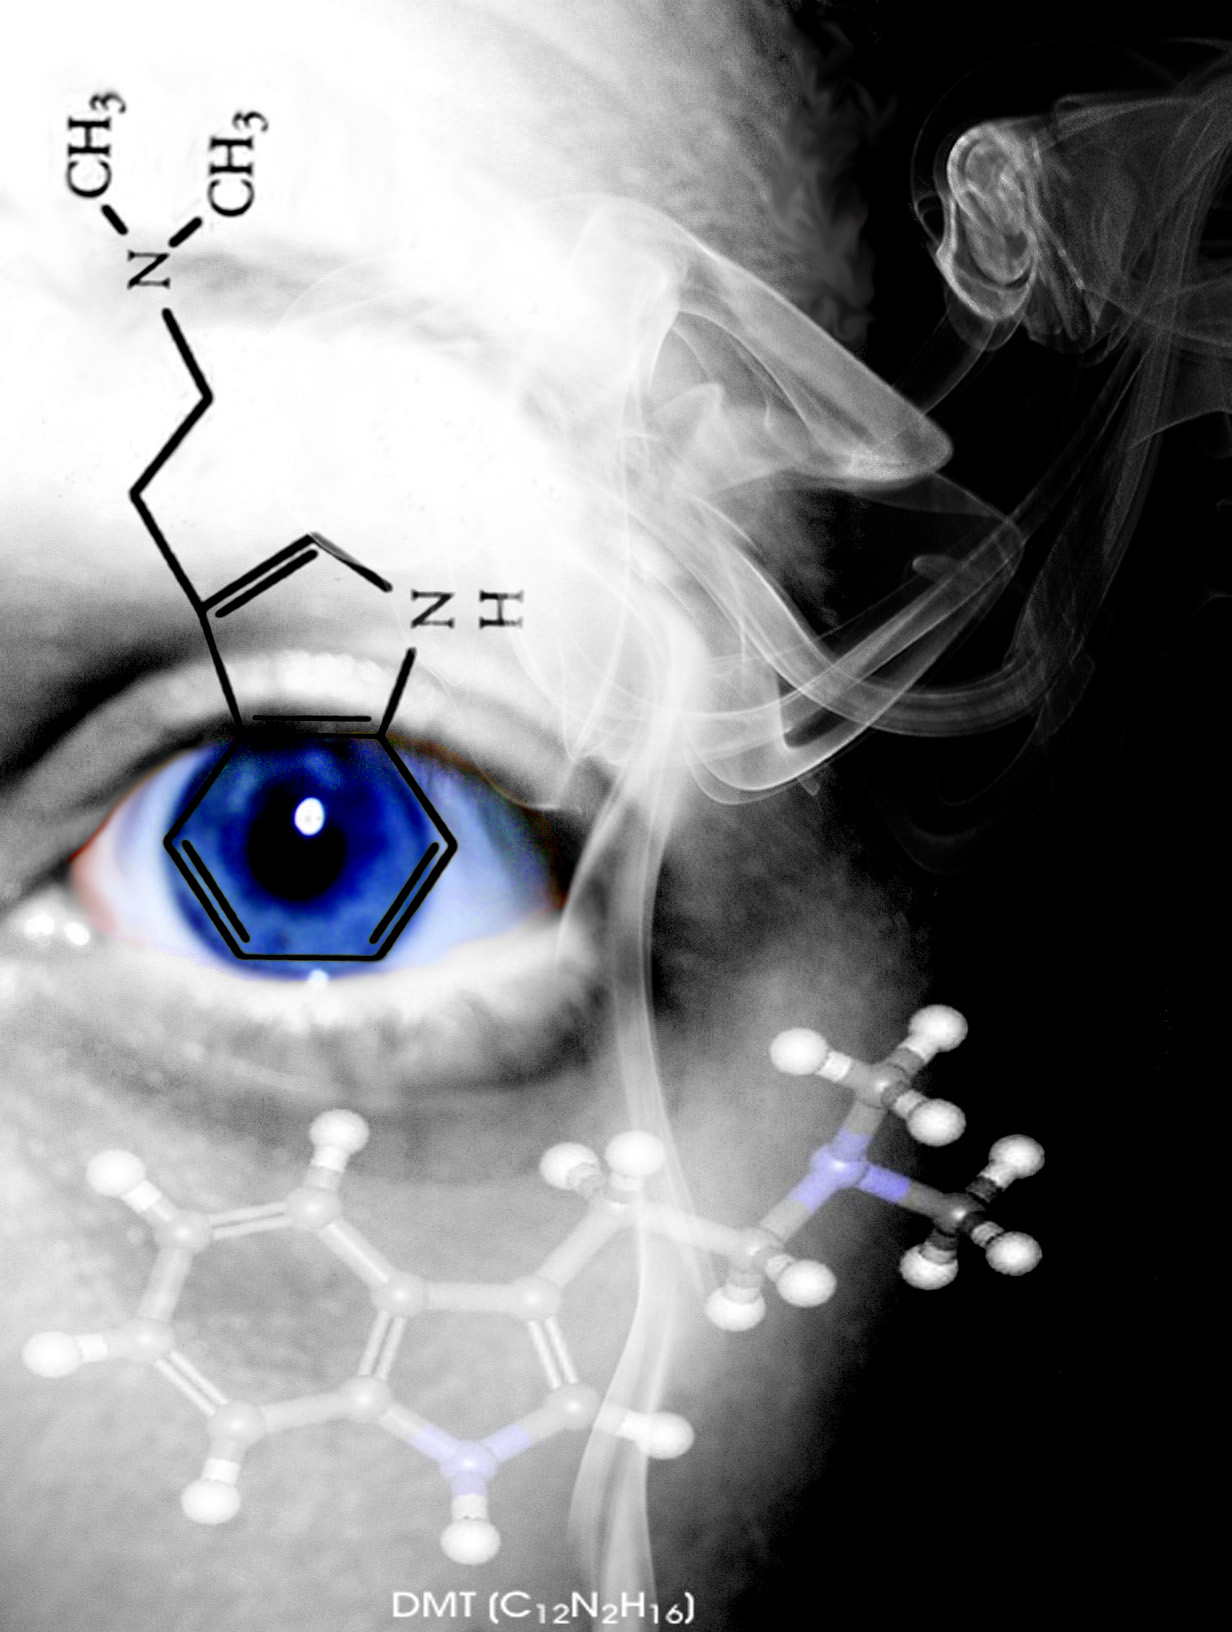 DMT_the_spirit_molecule_by_nathancolella